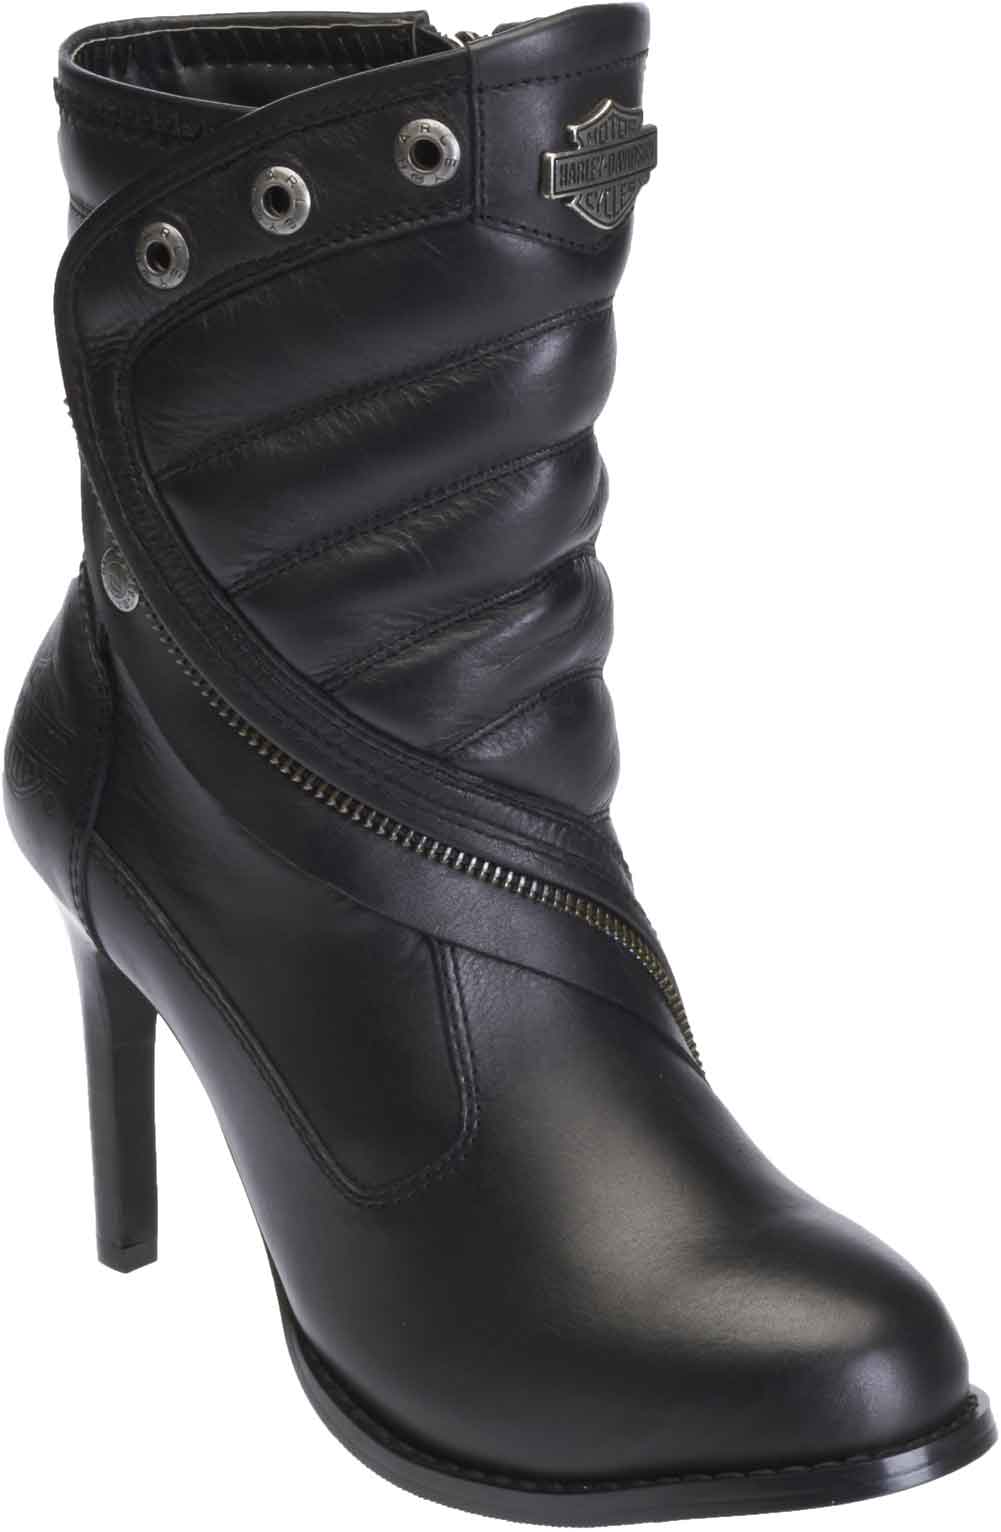 black leather fashion boots